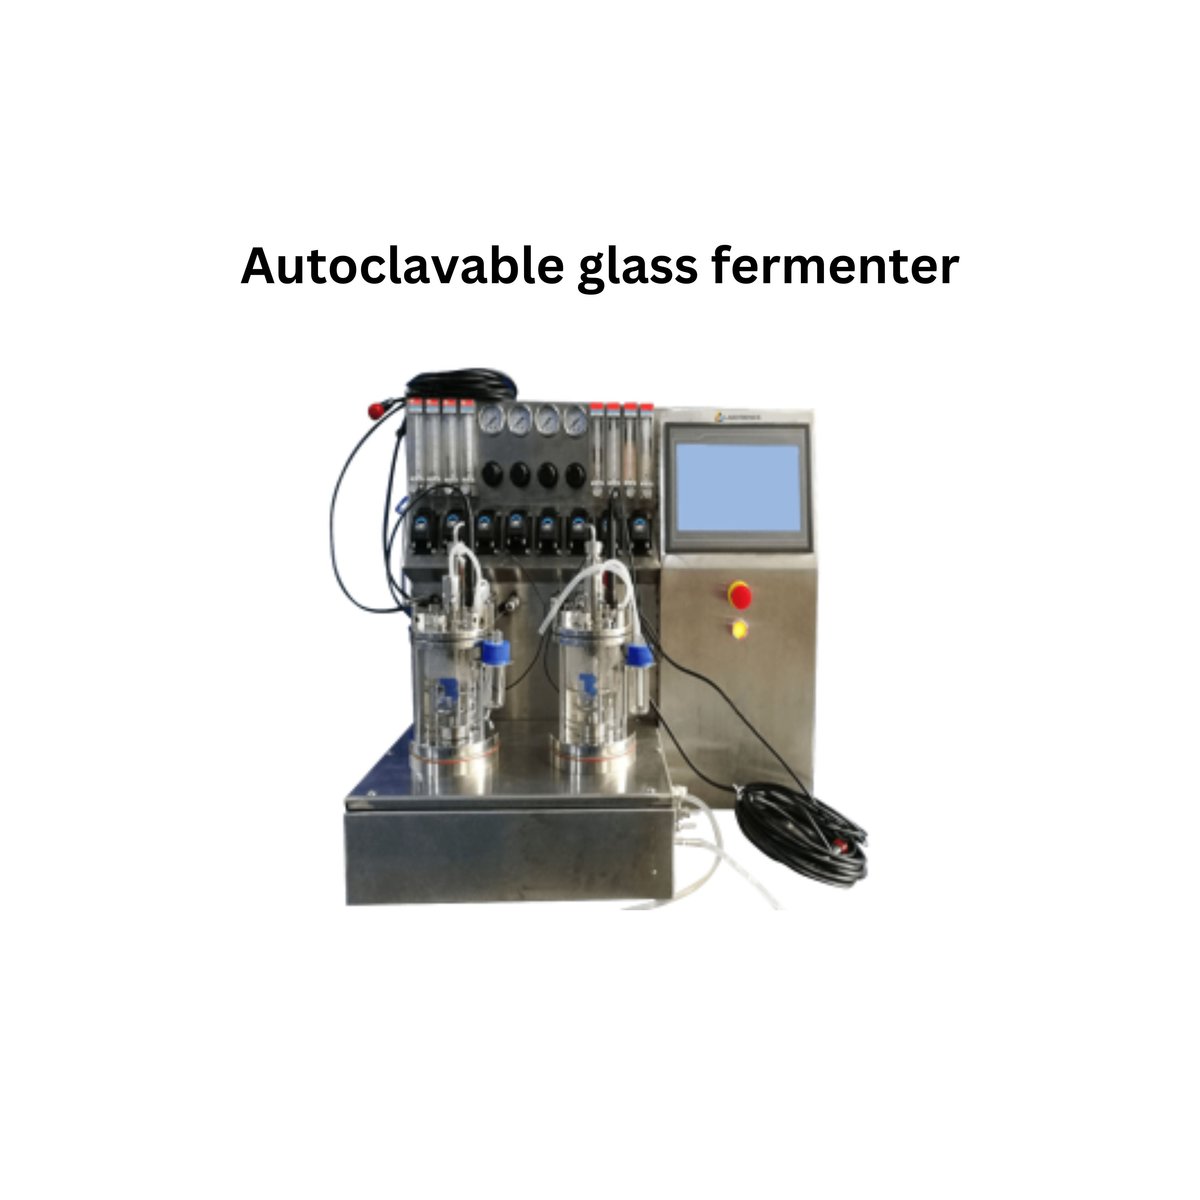 Autoclavable glass fermenter.jpg